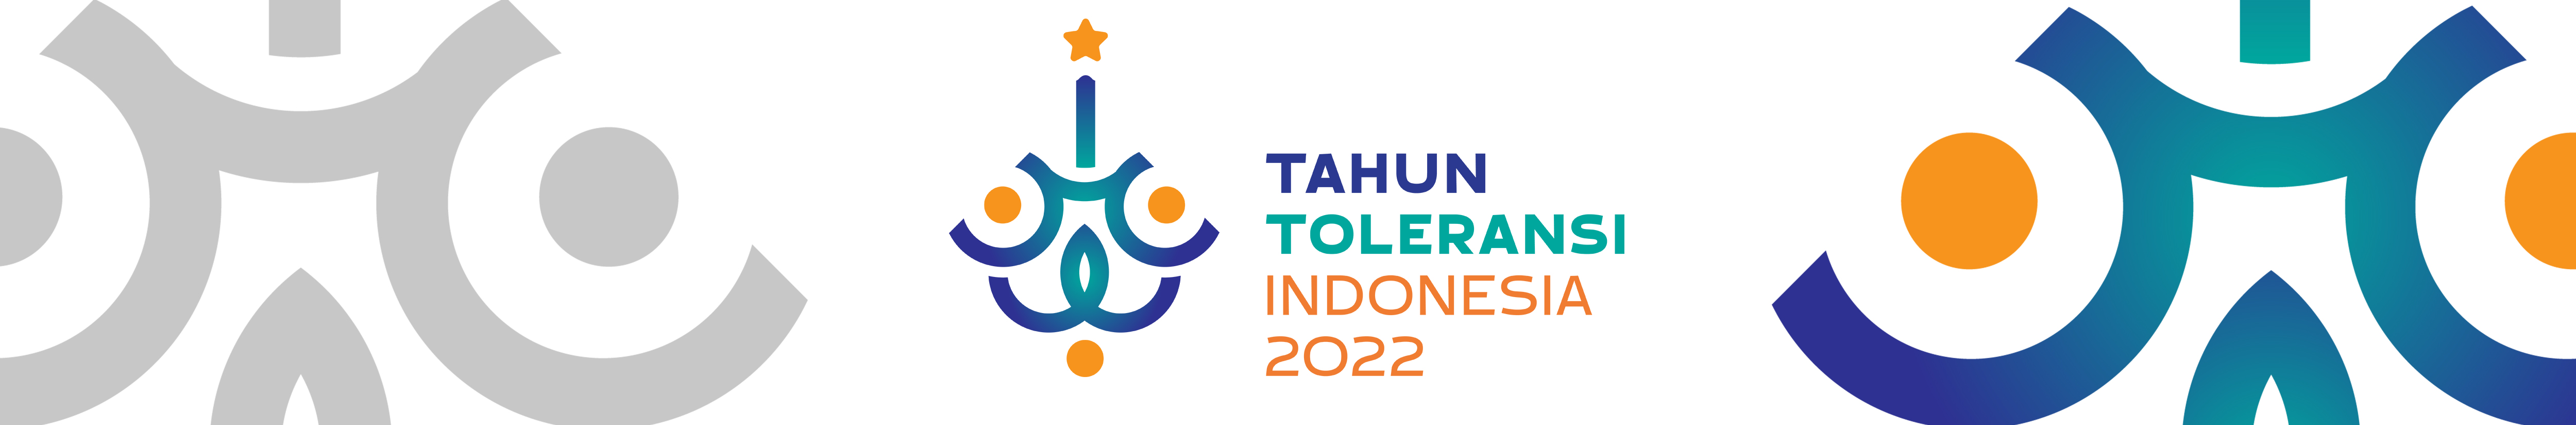 Banner Tahun Toleransi 2022